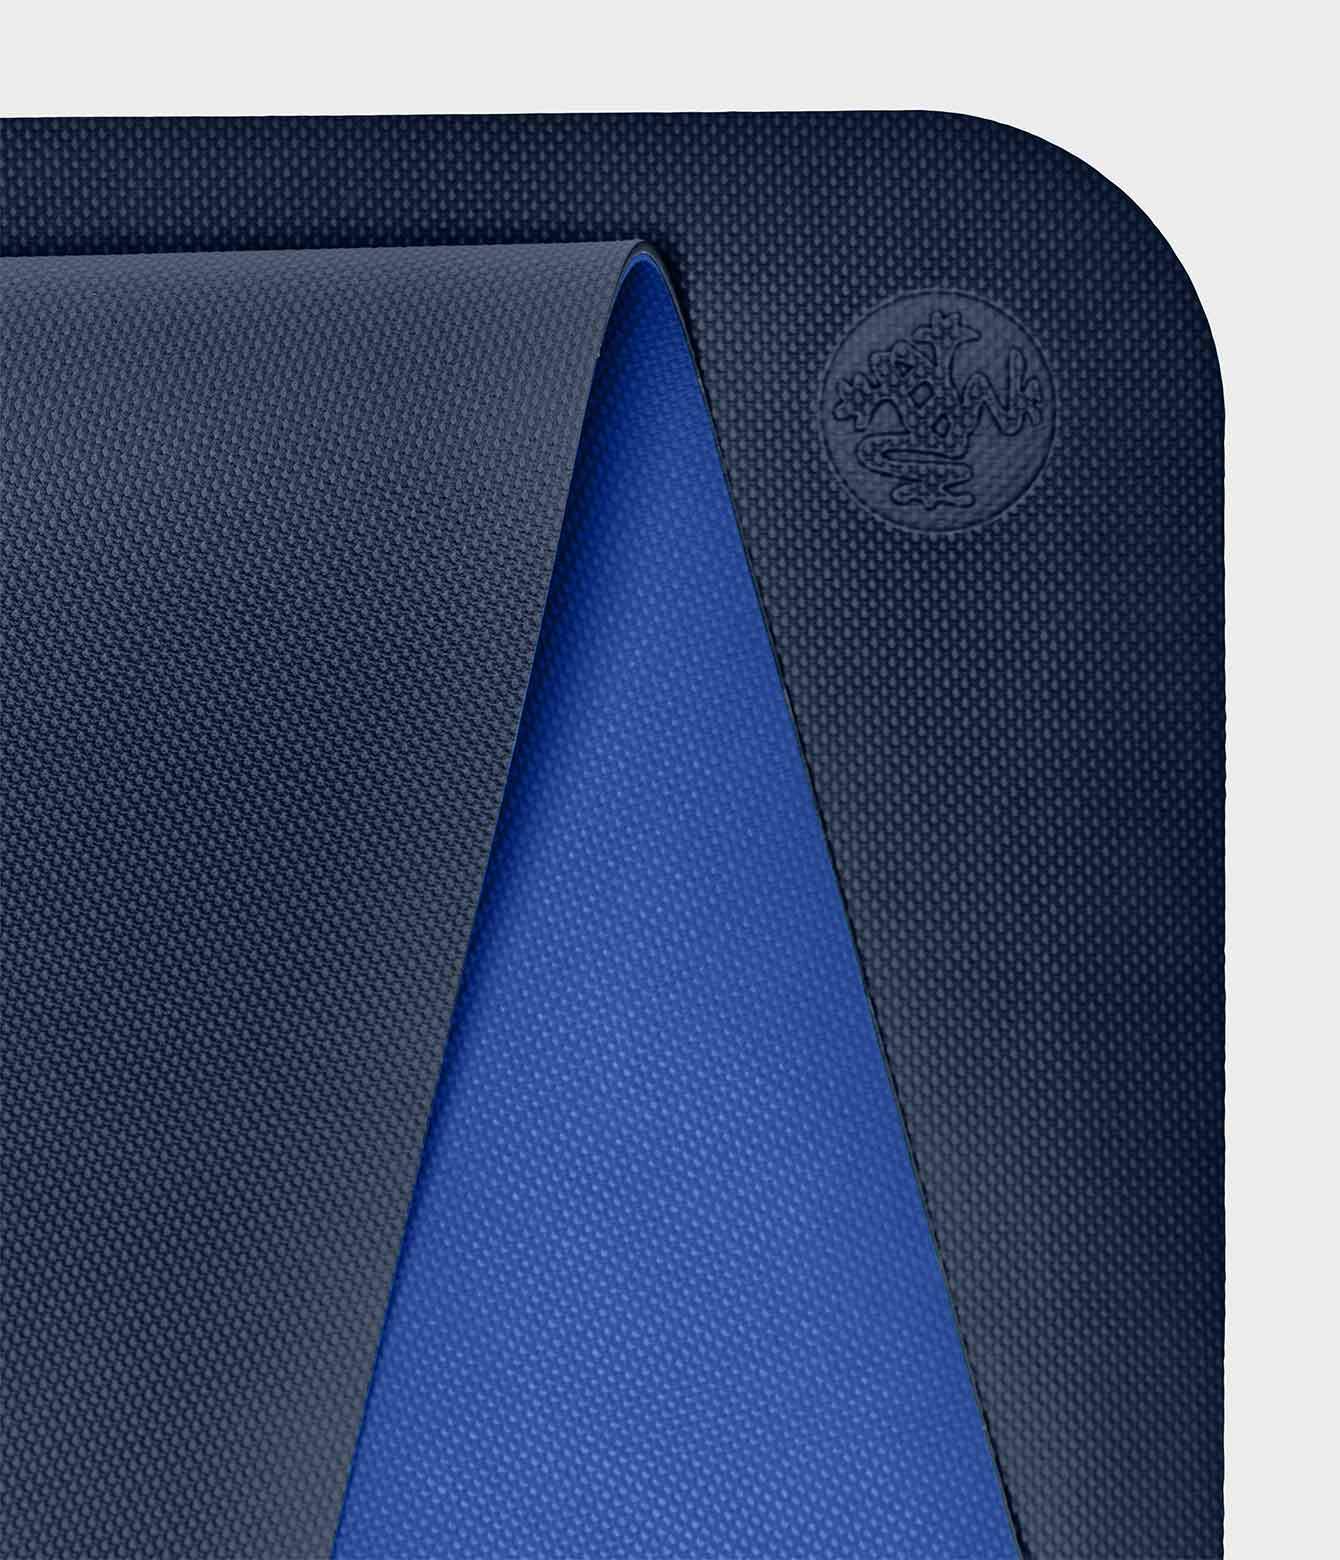 Manduka Begin Yoga Mat 5mm - Toxic Free & Eco-friendly, Navy